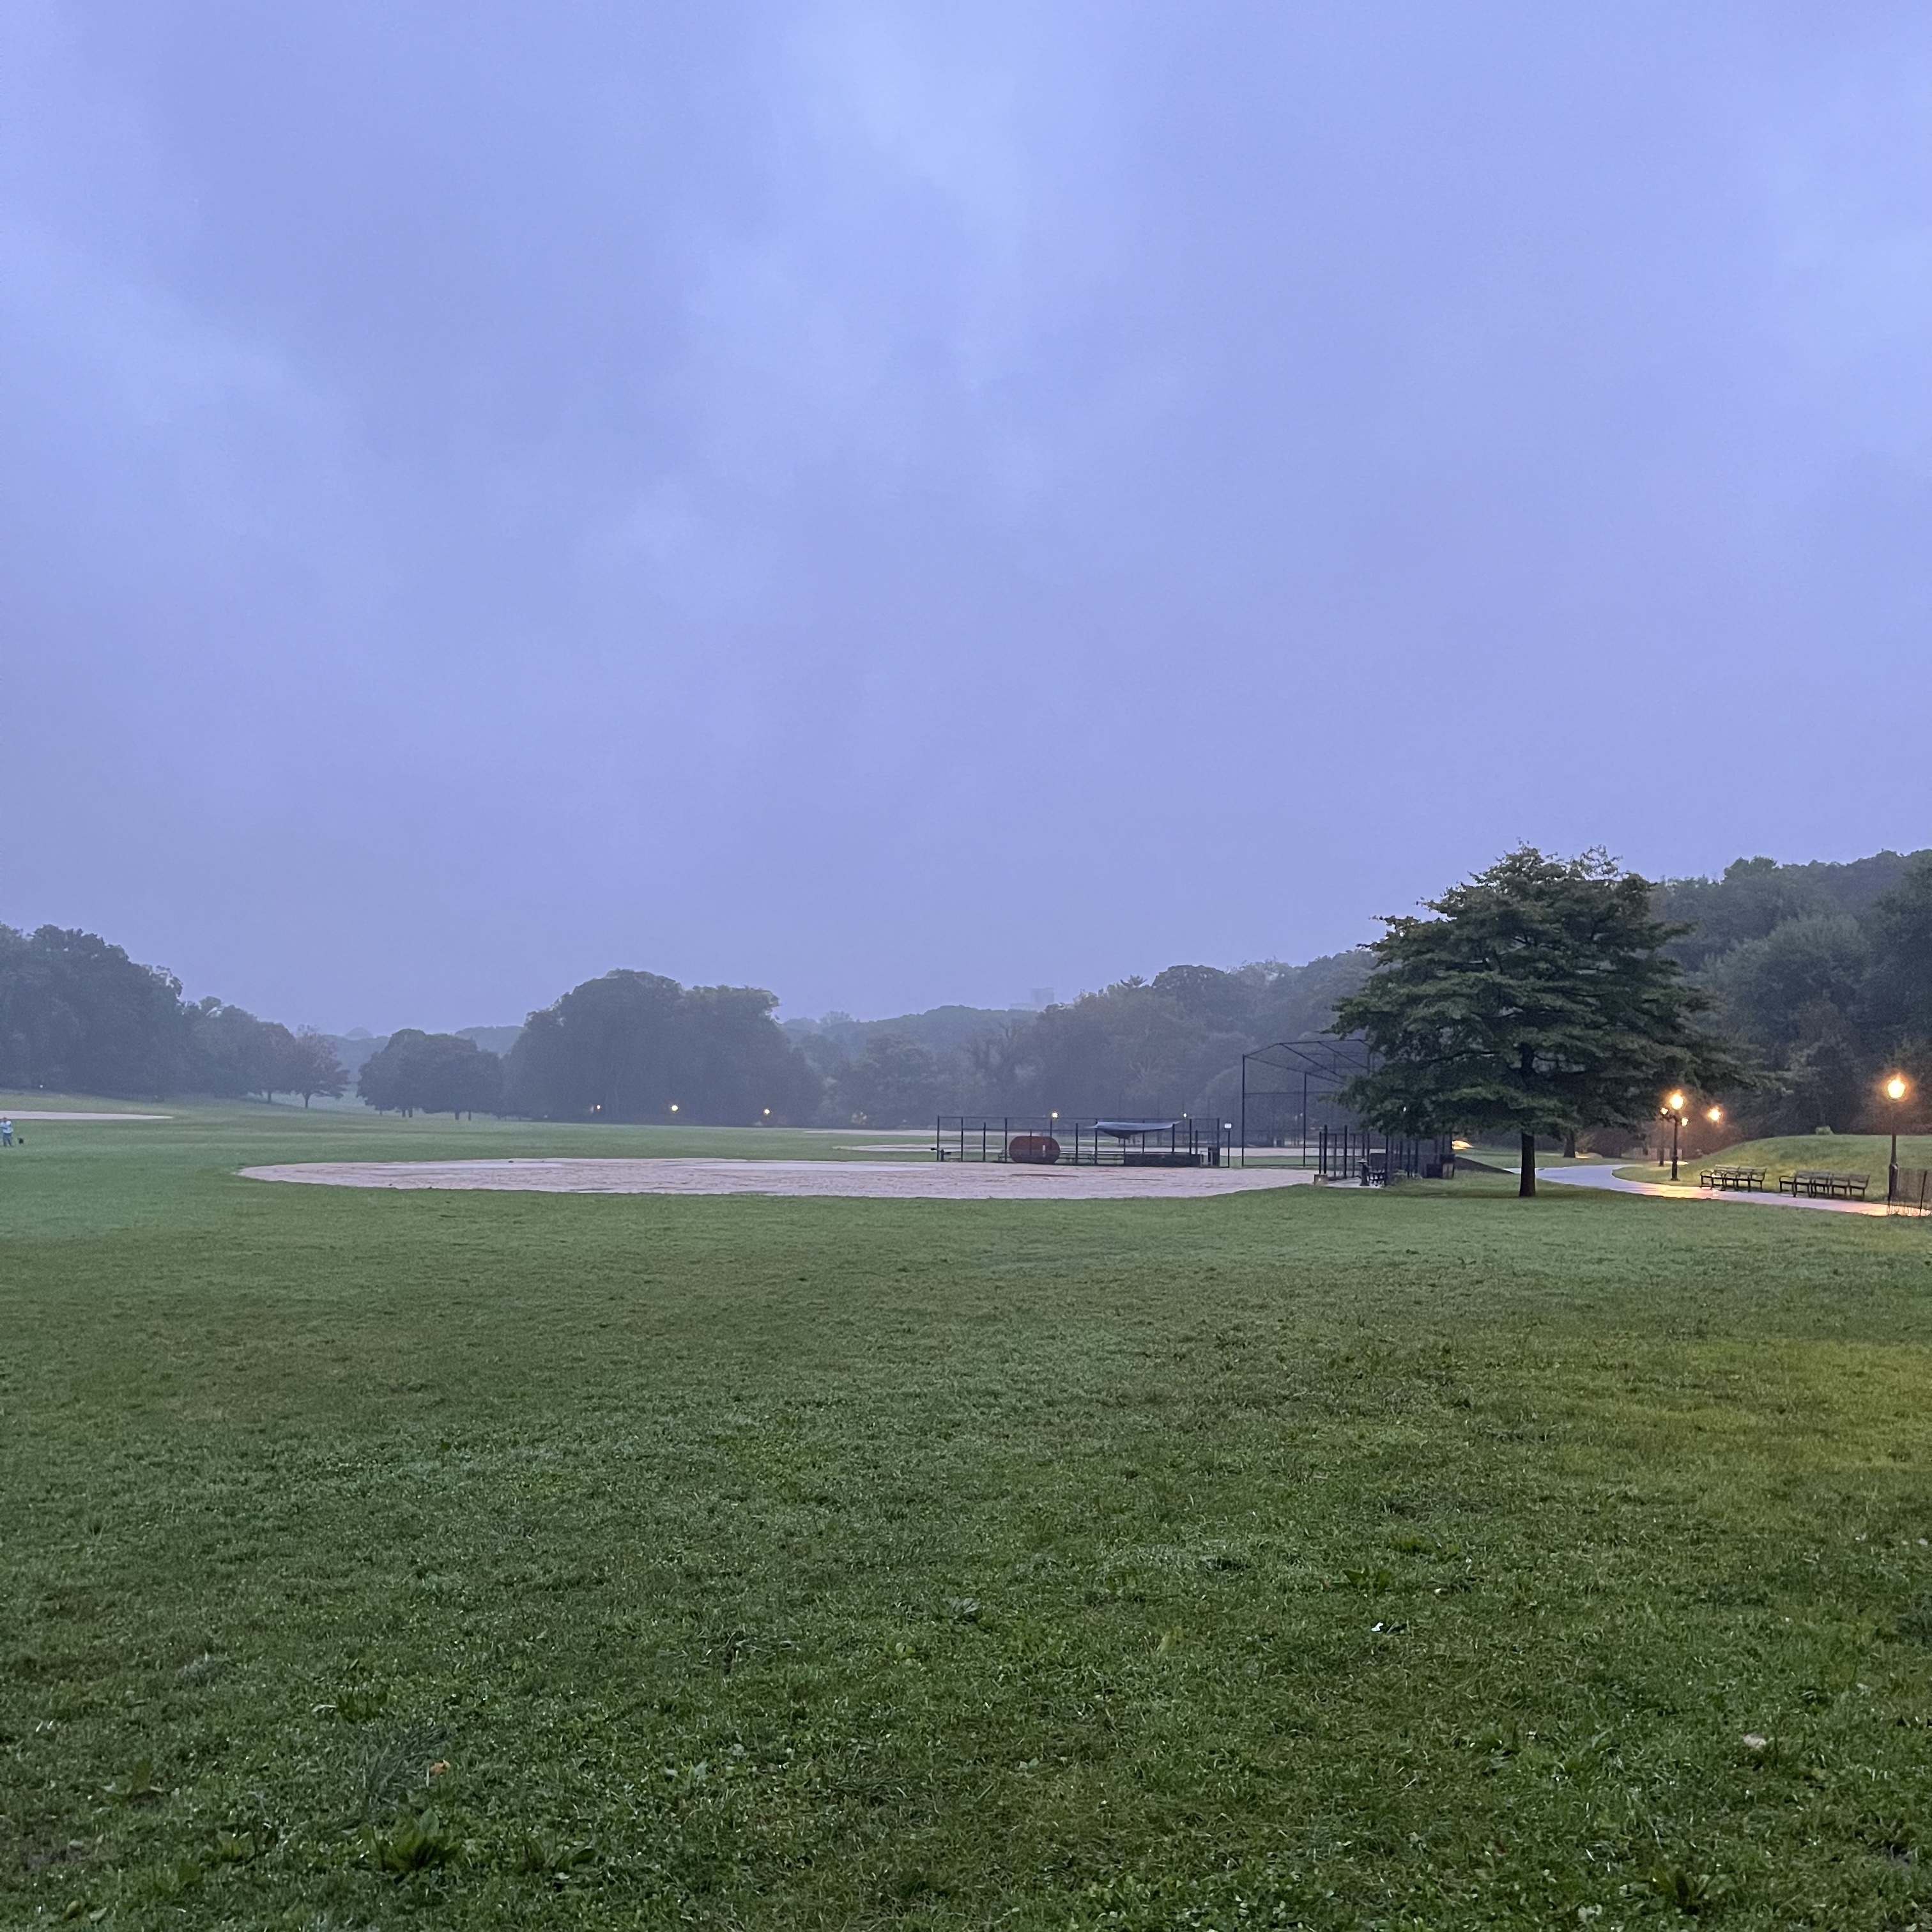 Misty evening. Prospect Park, Brooklyn.